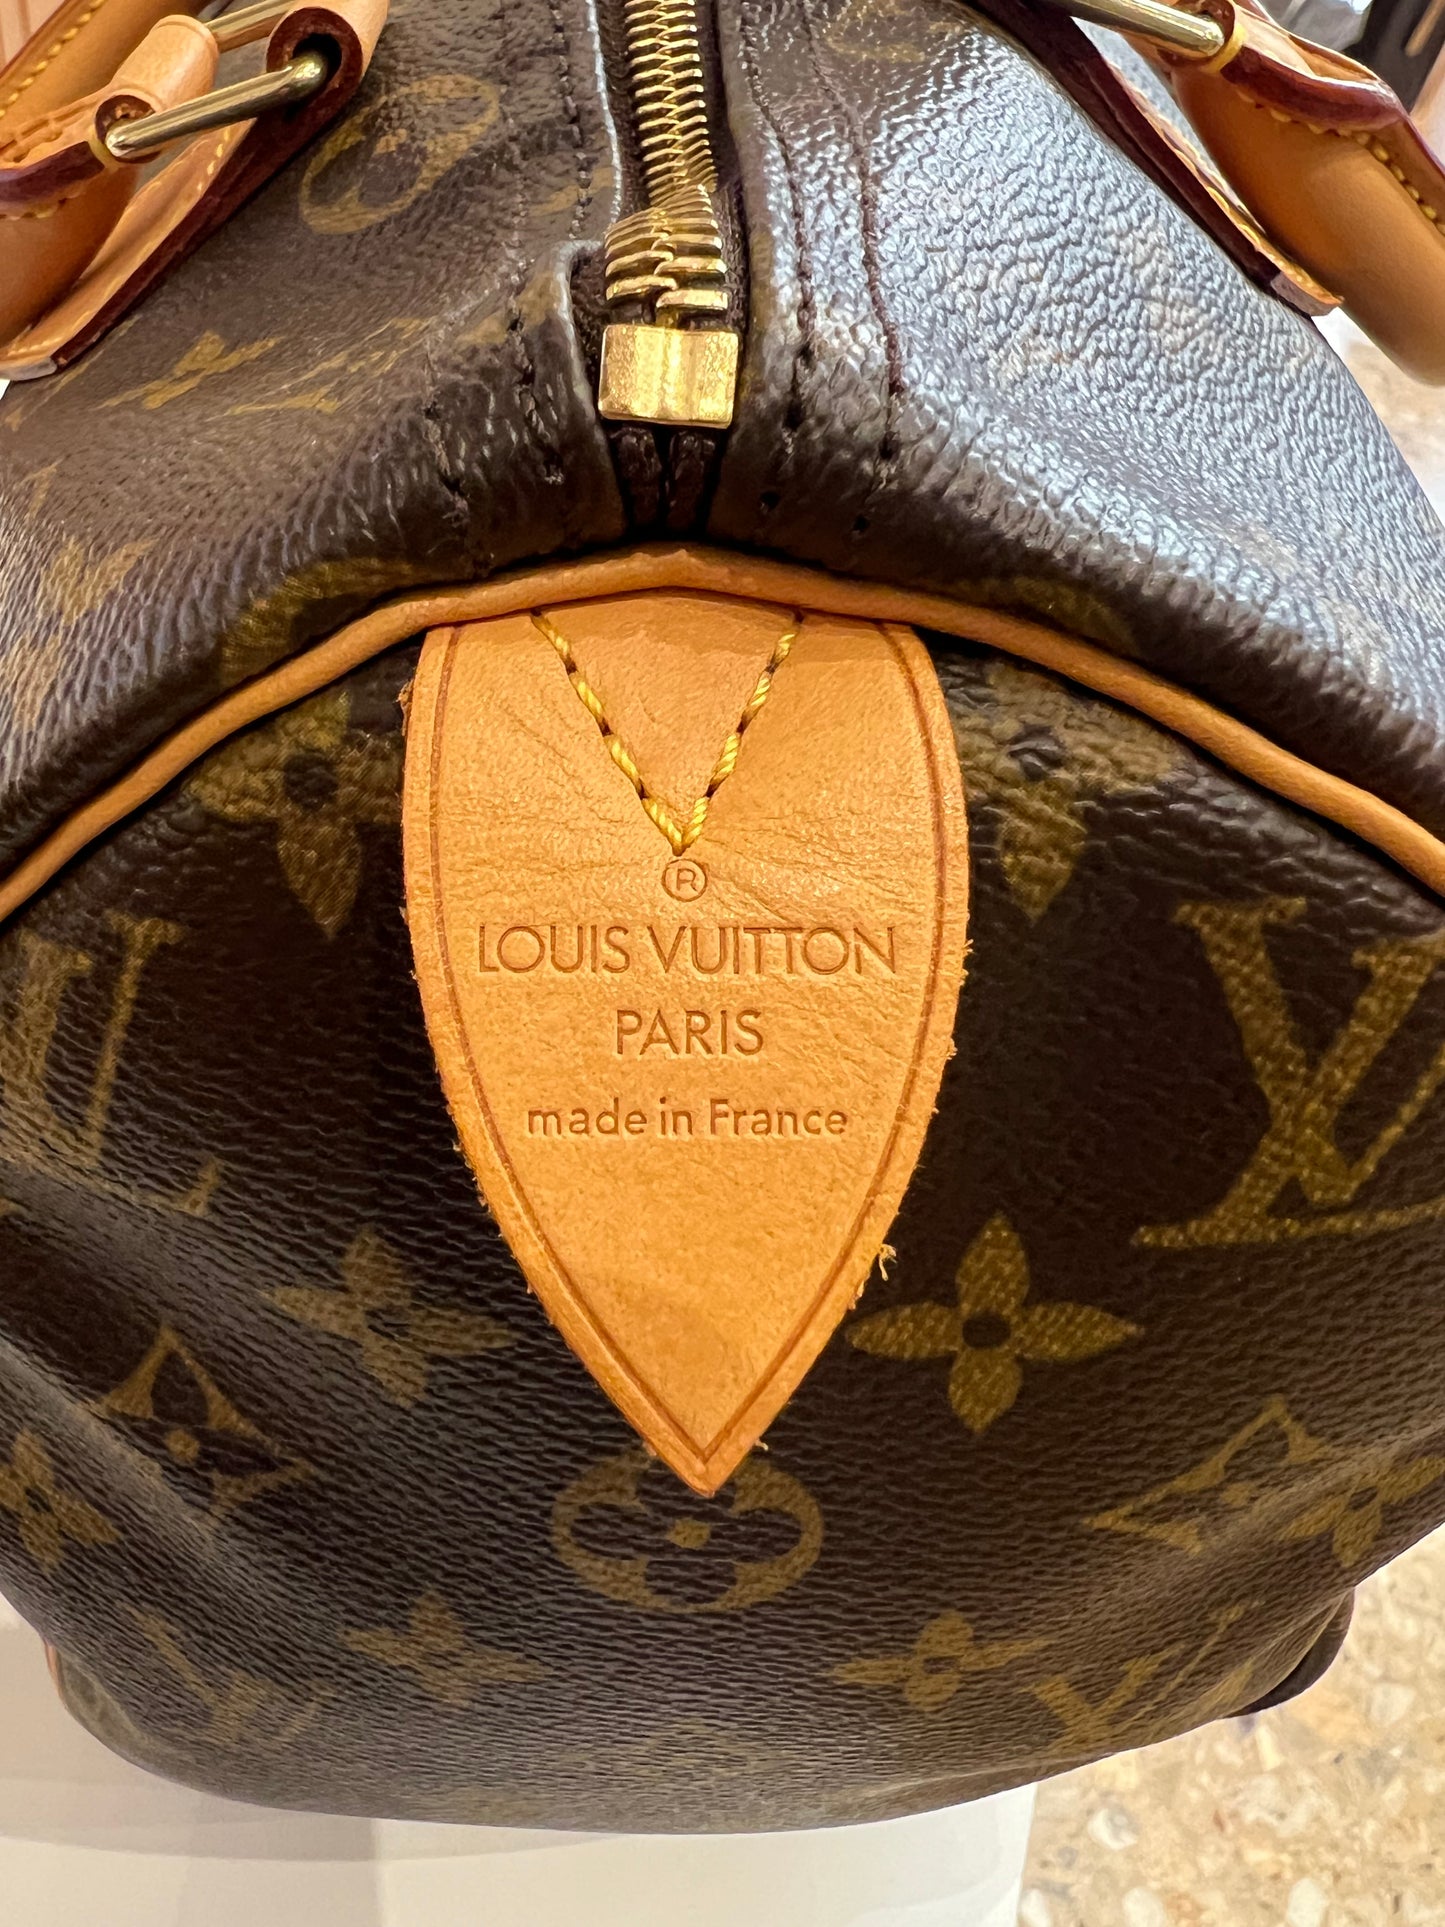 Louis Vuitton Speedy 30